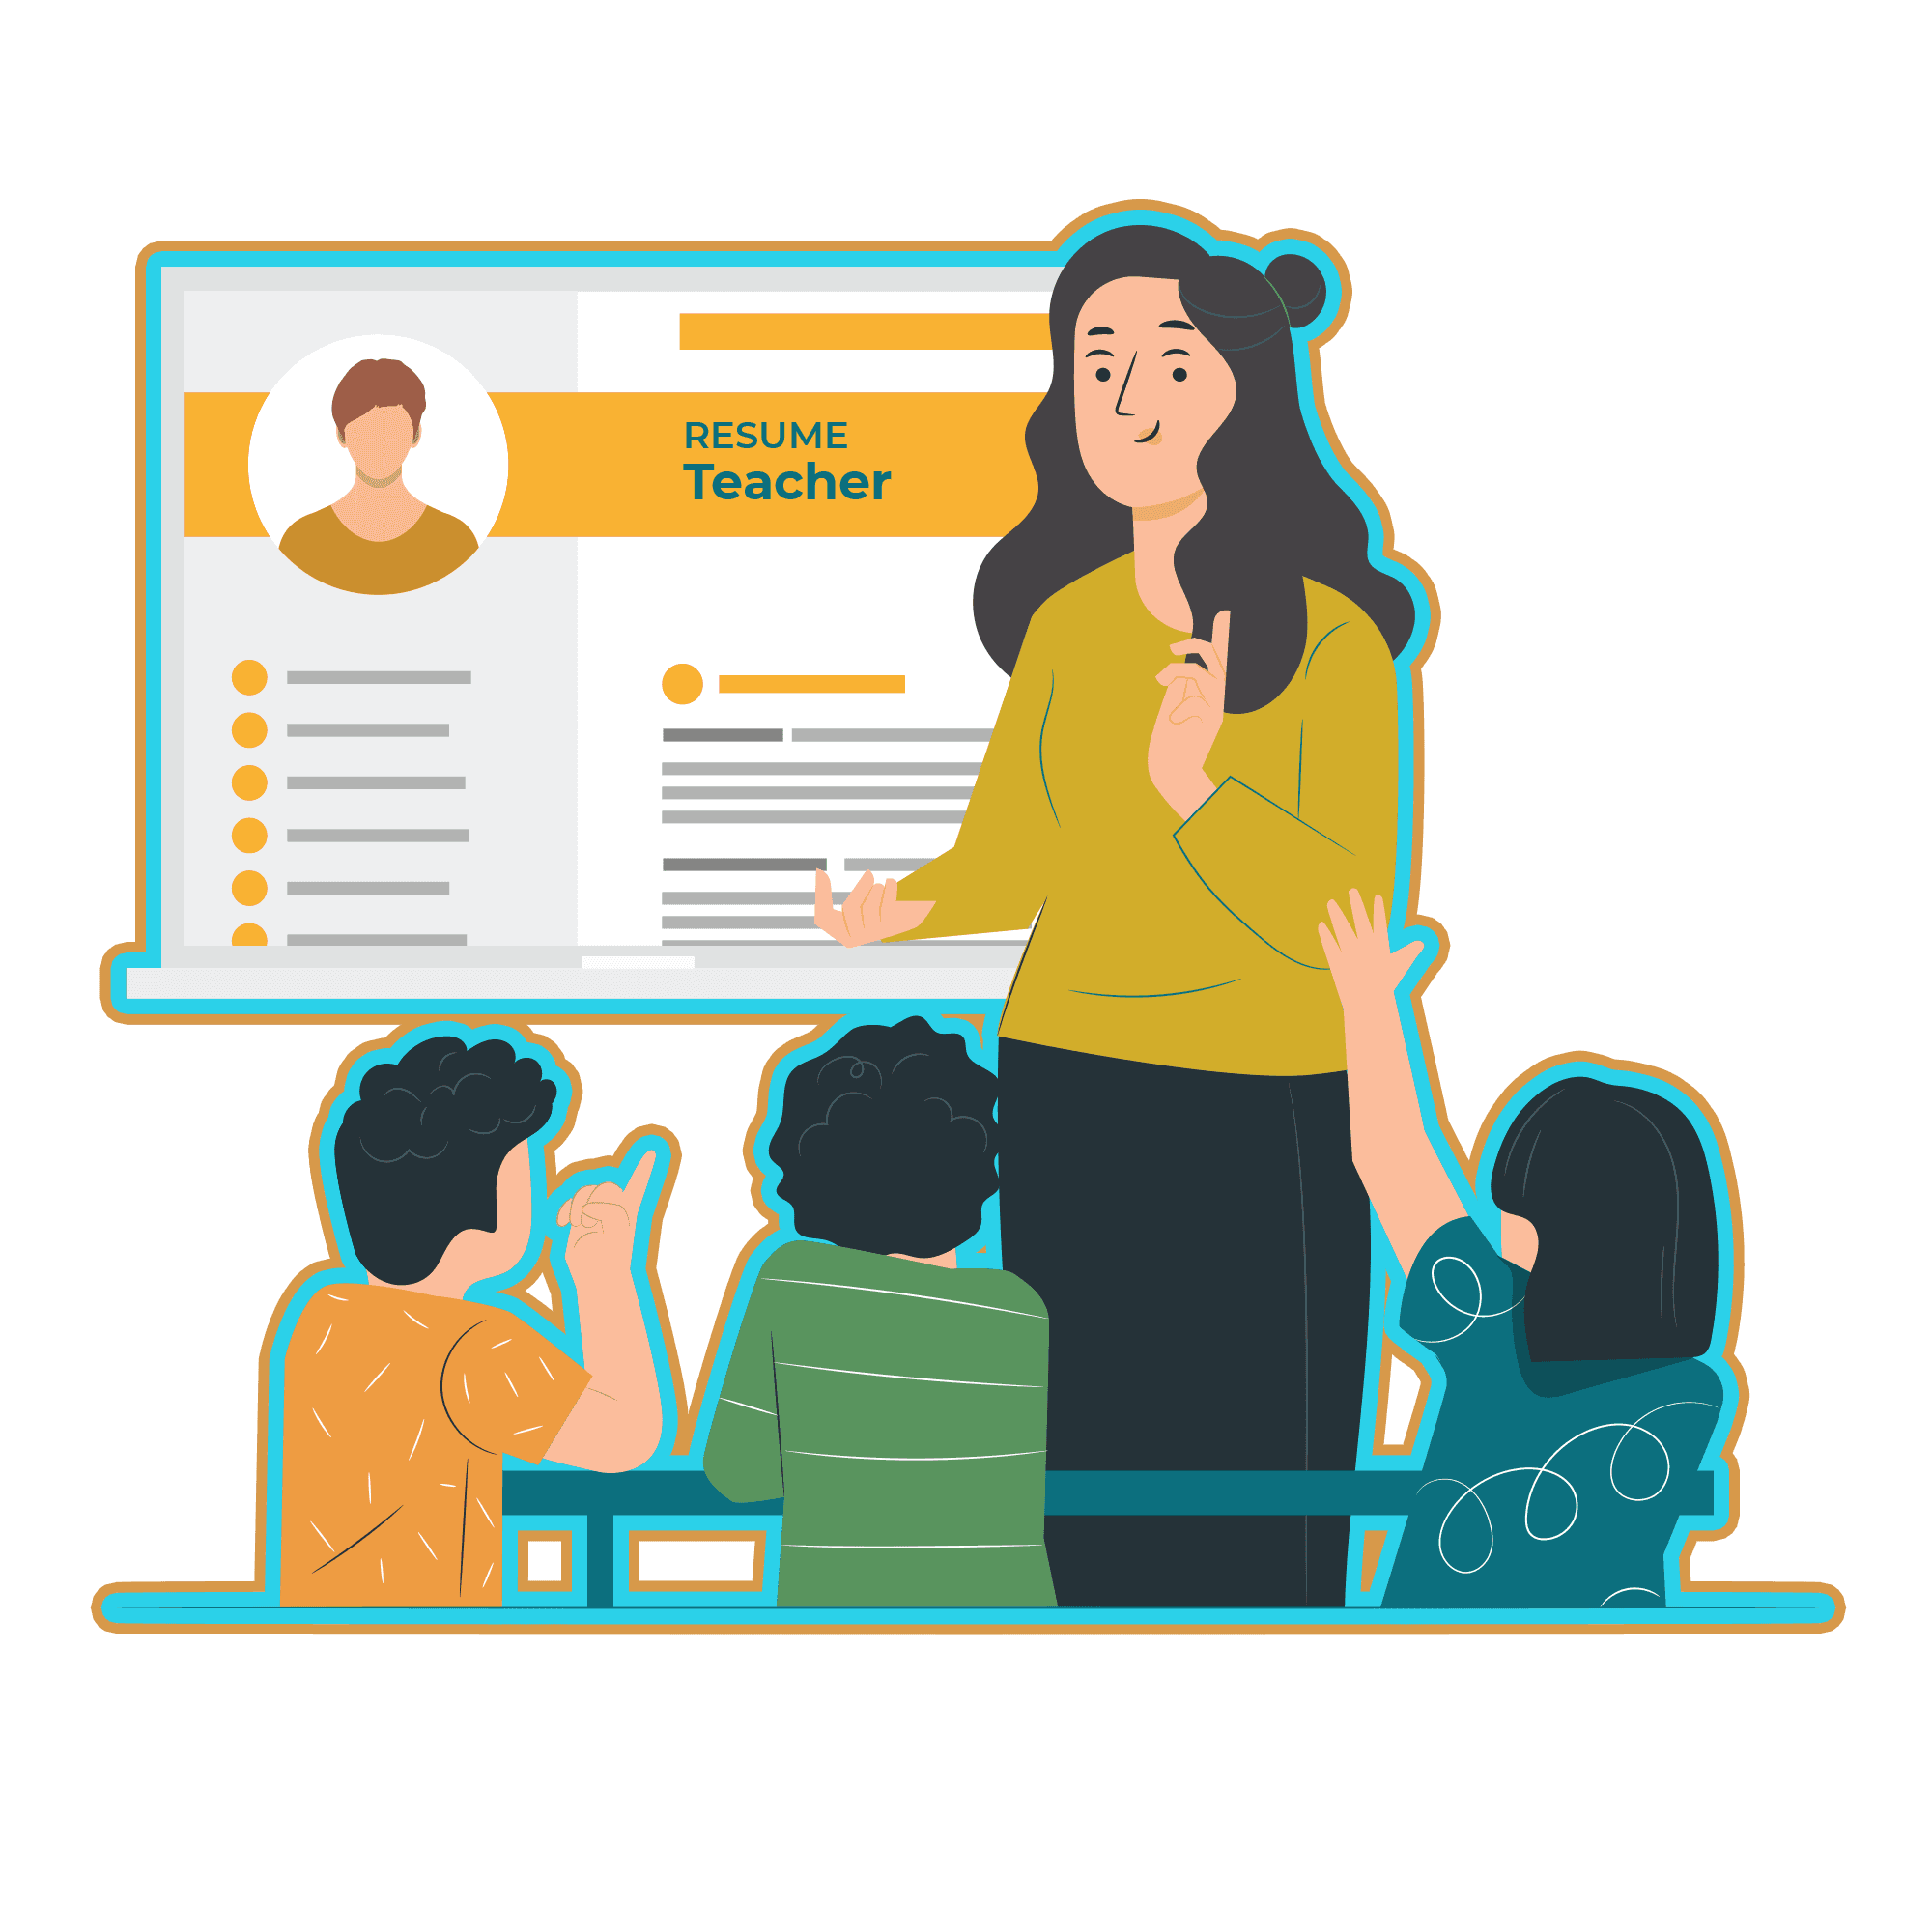 Teacher Resume: Tips, Templates & Examples